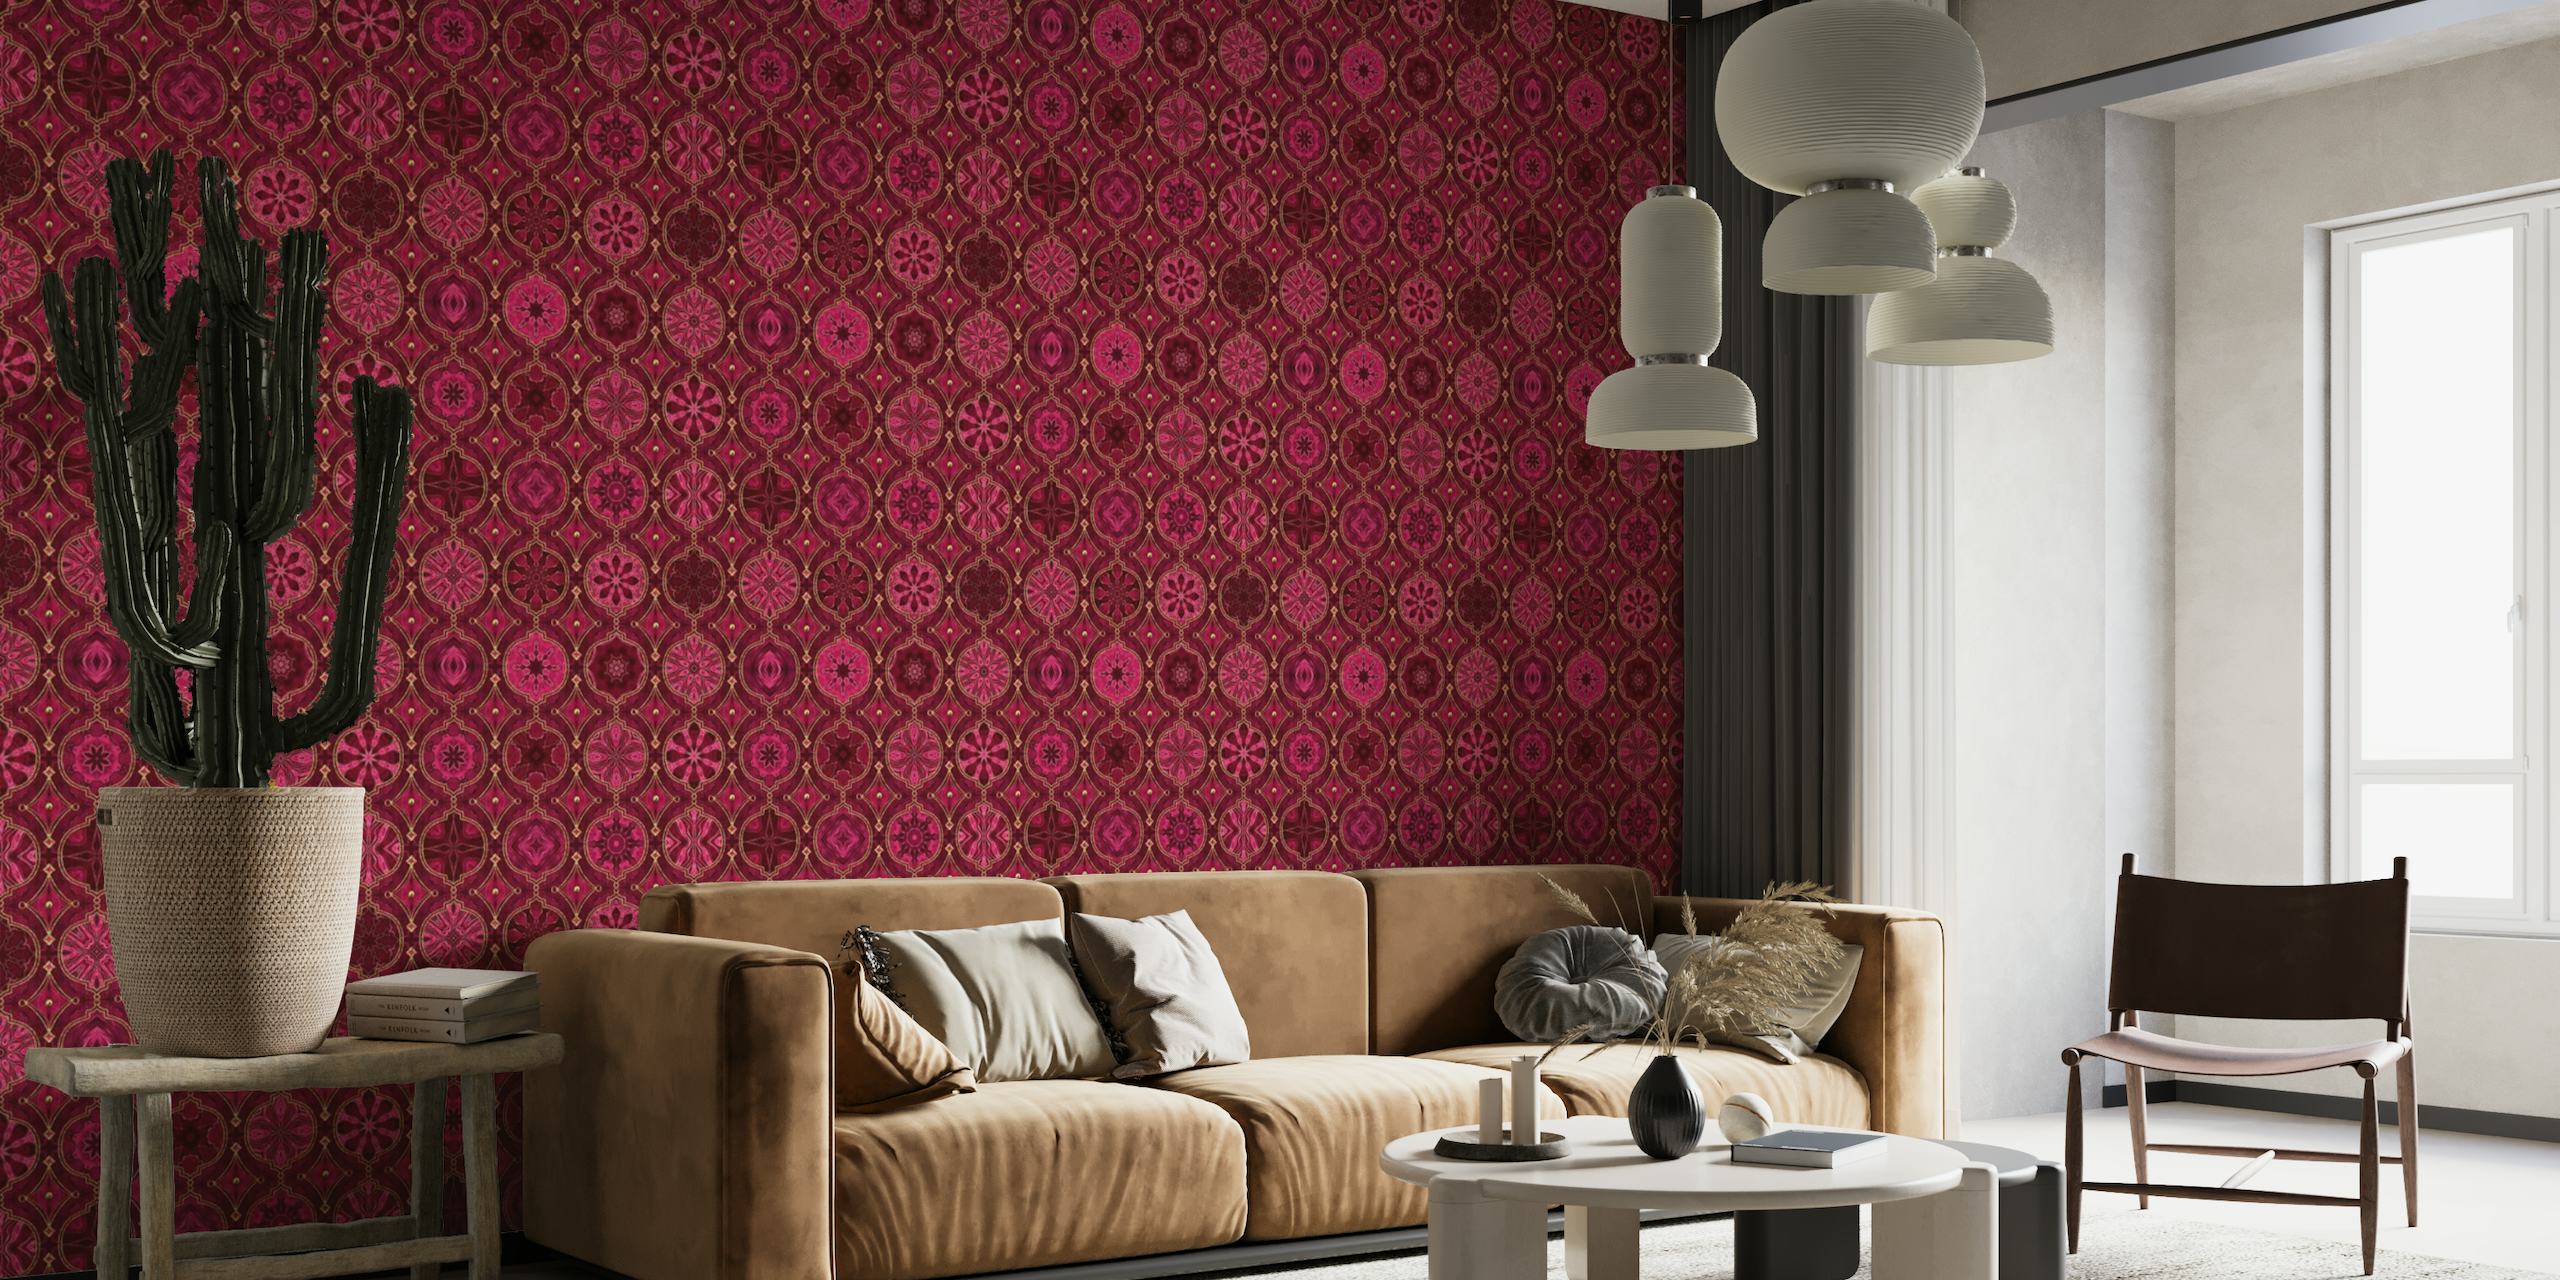 Treasures of Morocco Oriental Tile Design Burgundy Pink Gold tapeta